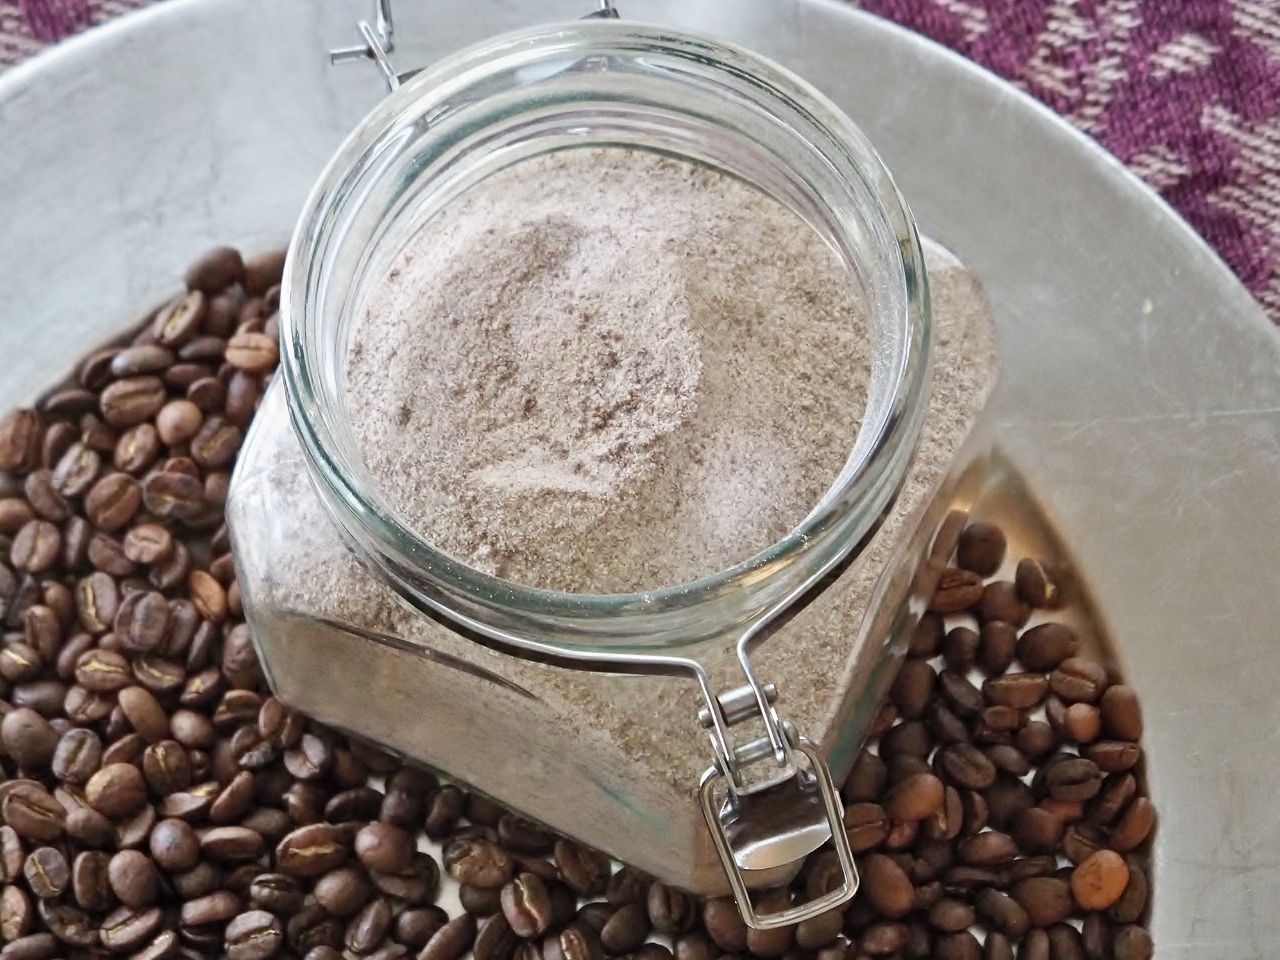 DIY Cafe Vienna Powdered Coffee Mix